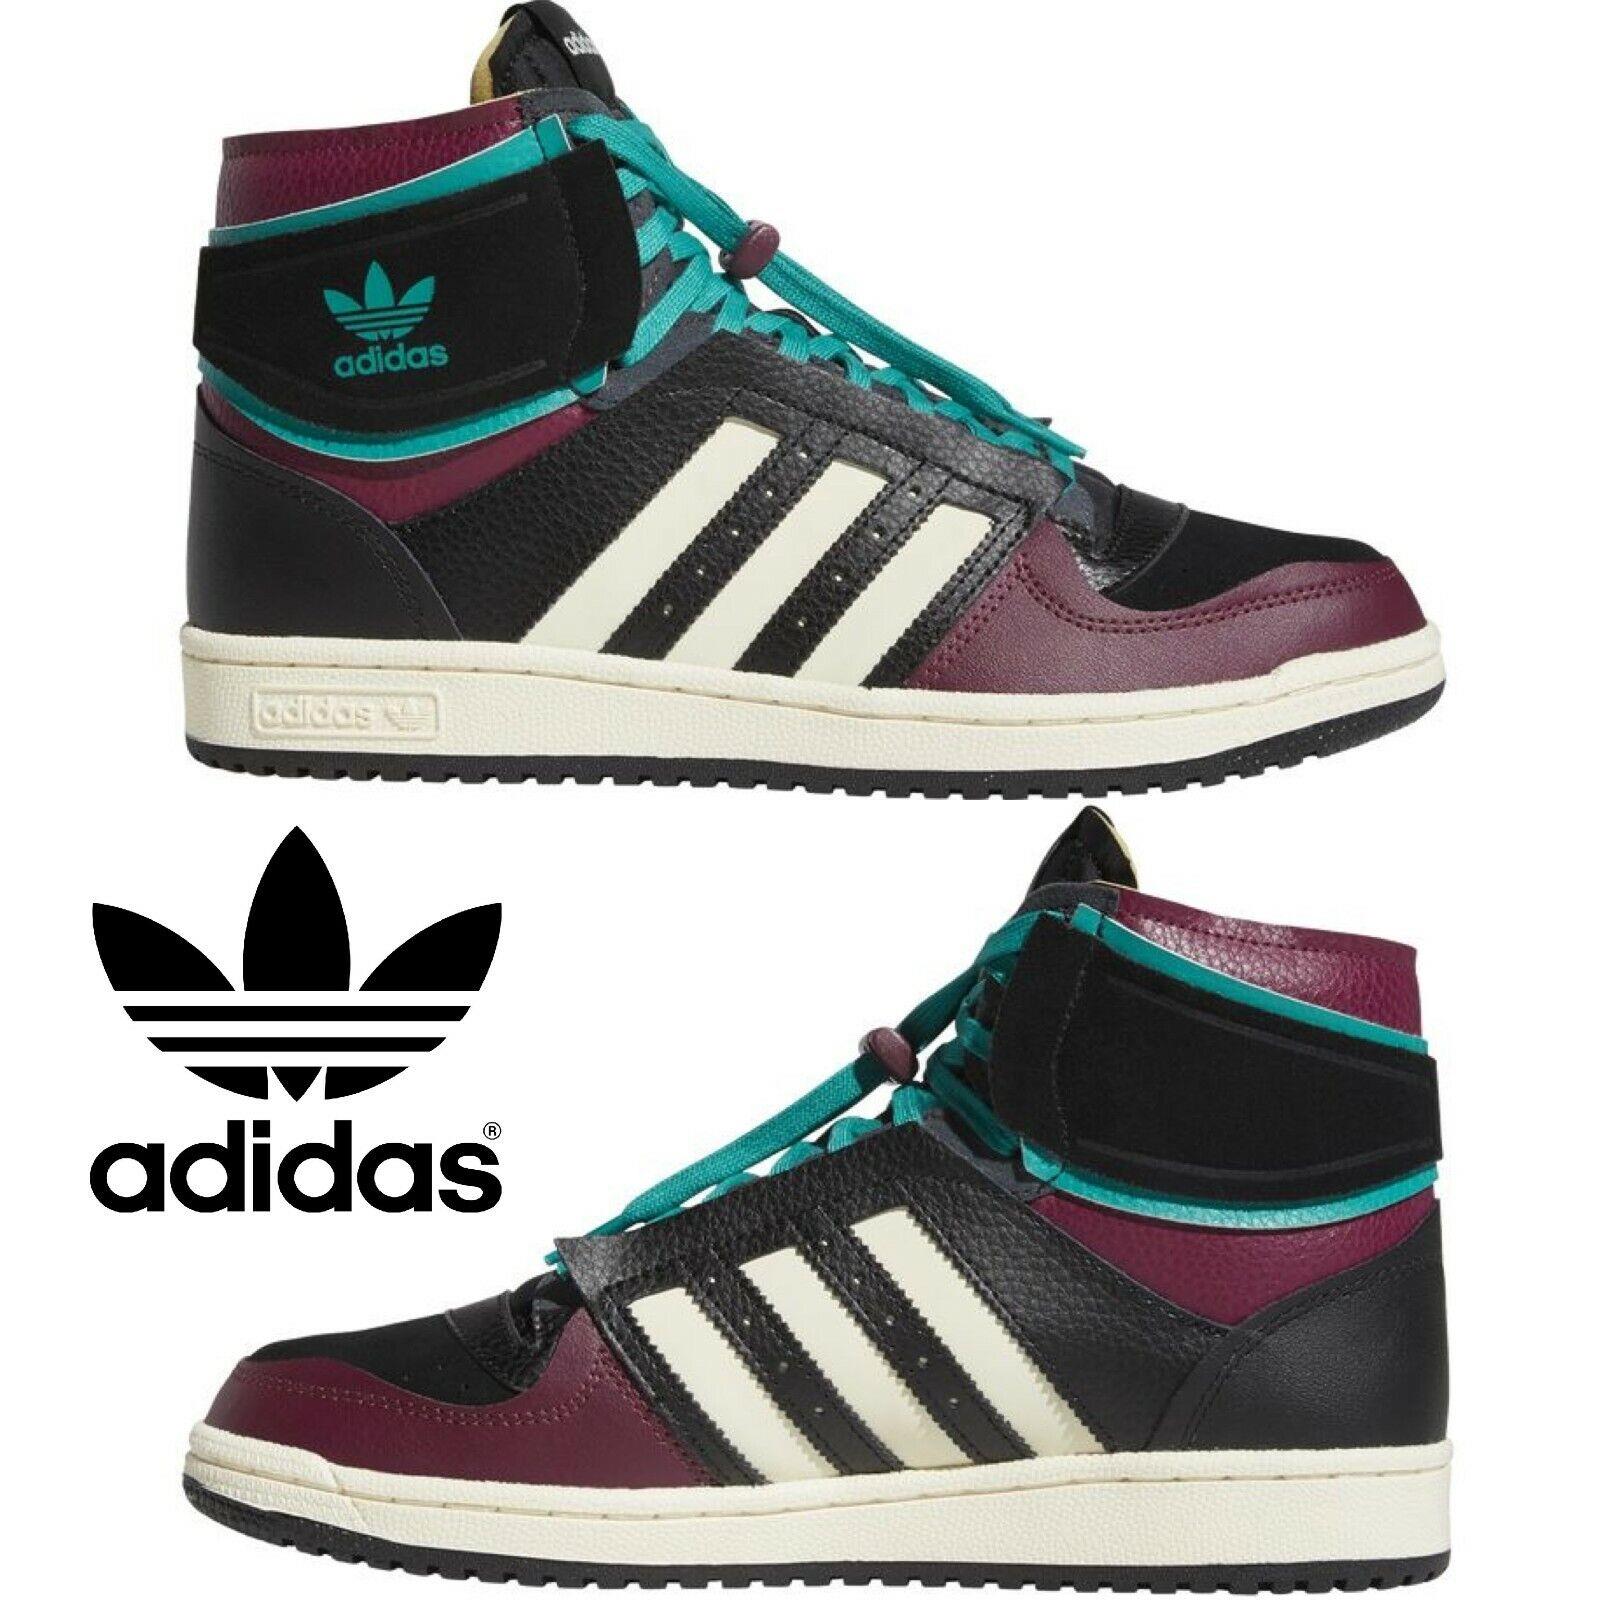 Adidas Originals Top Ten Mid Men`s Sneakers Comfort Sport Casual Shoes Black - Black , Black/Crimson/Green Manufacturer